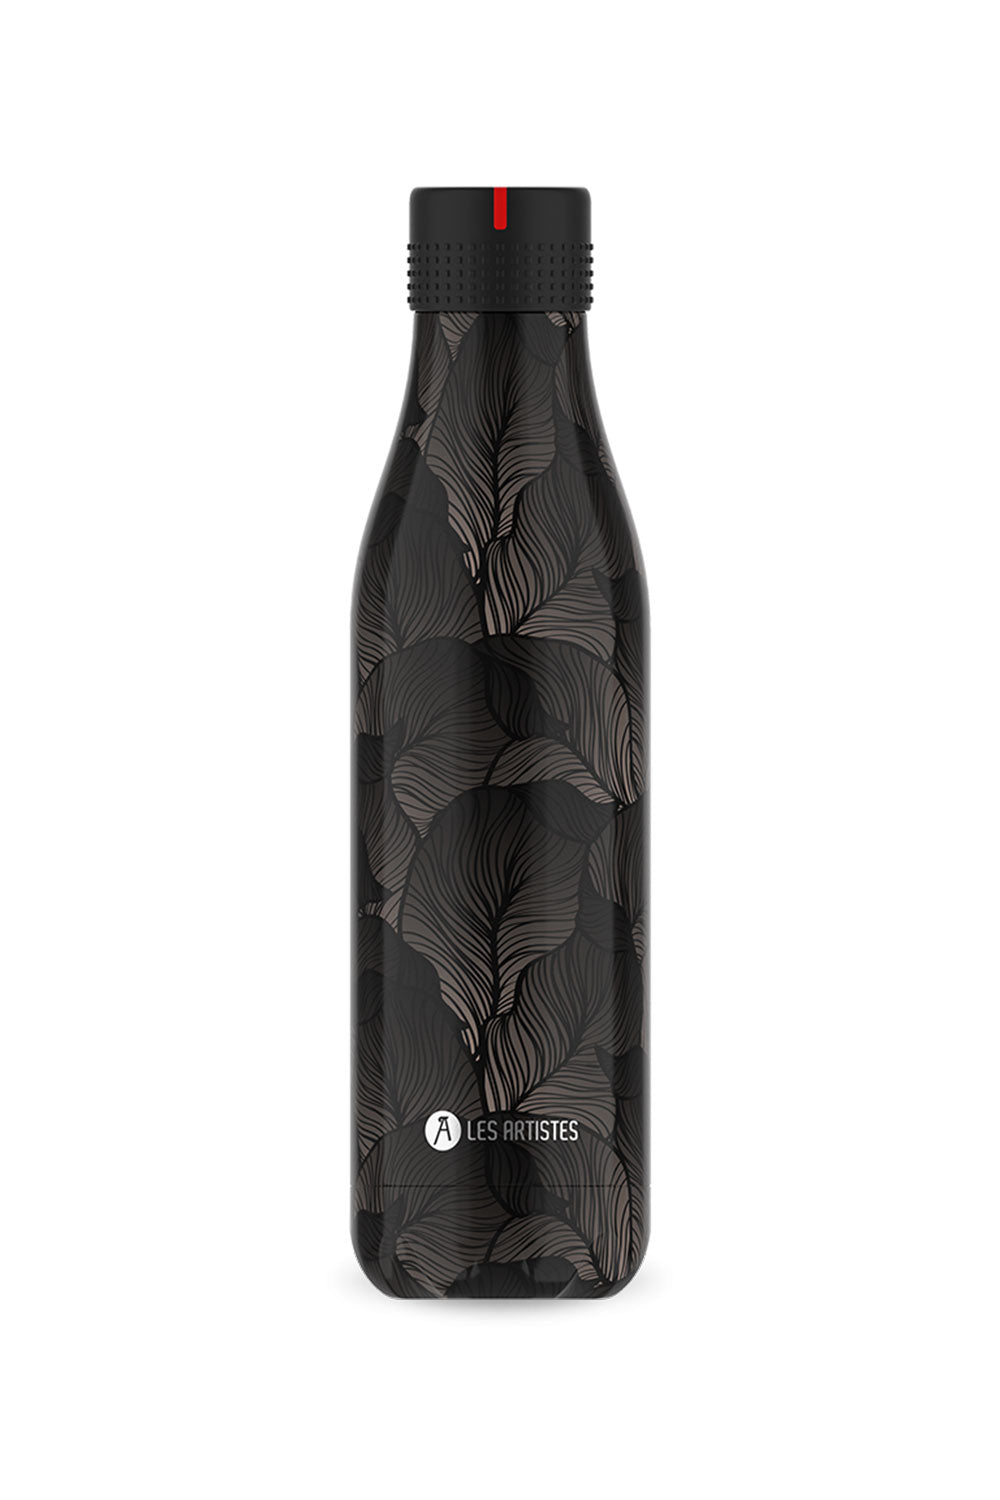 Damask Bril Bottle, 500 ml - Maison7